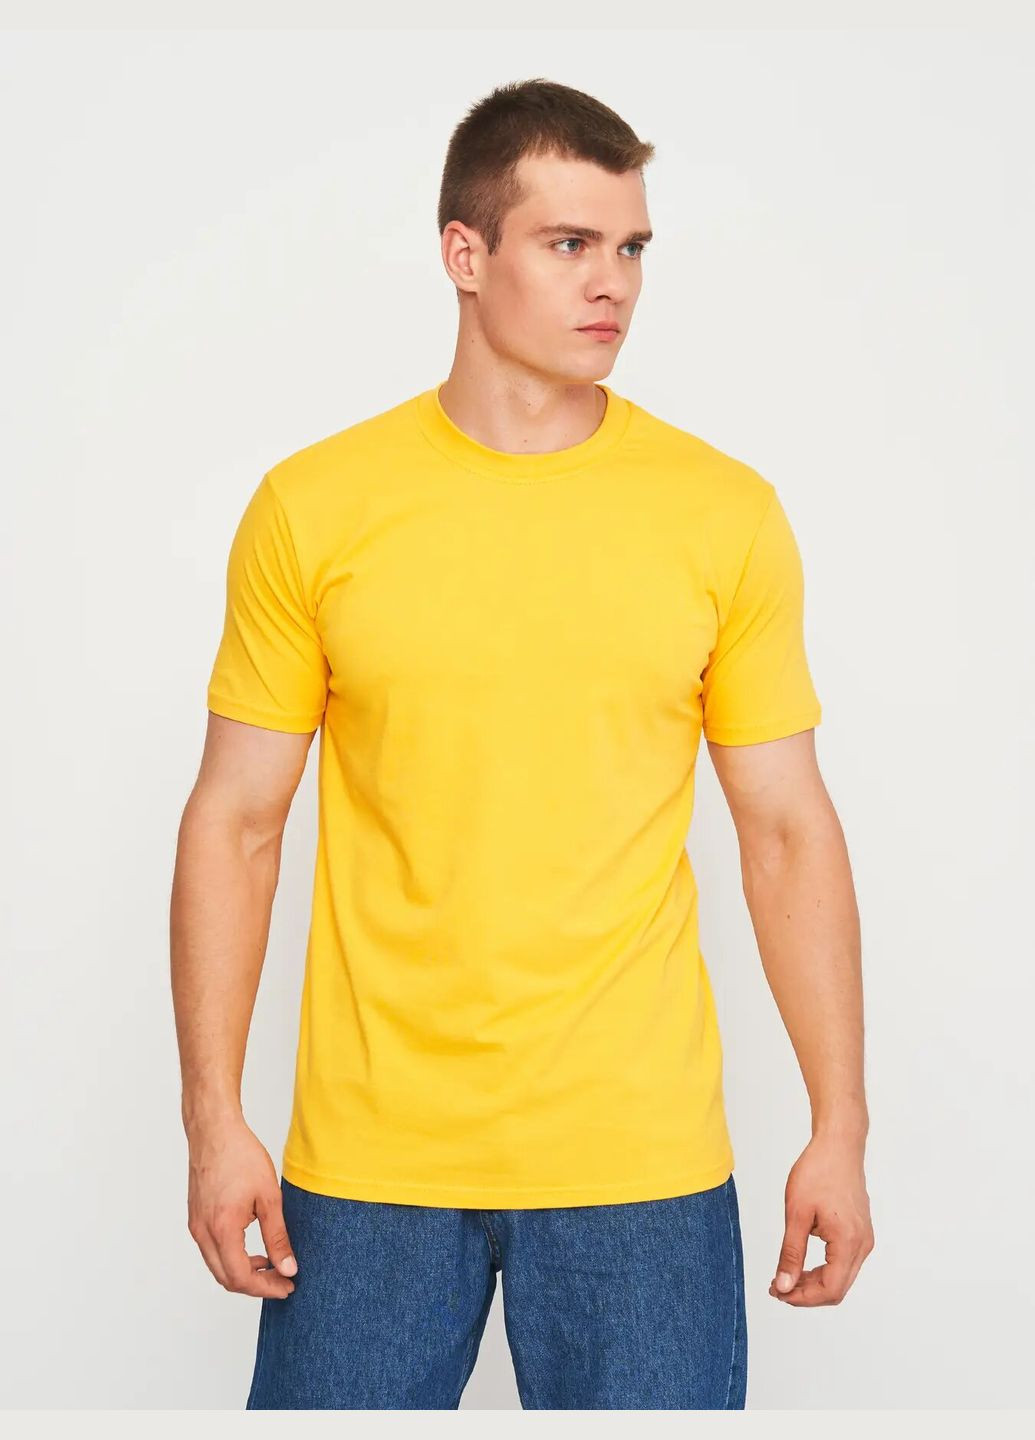 Желтая мужская футболка с коротким рукавом Роза